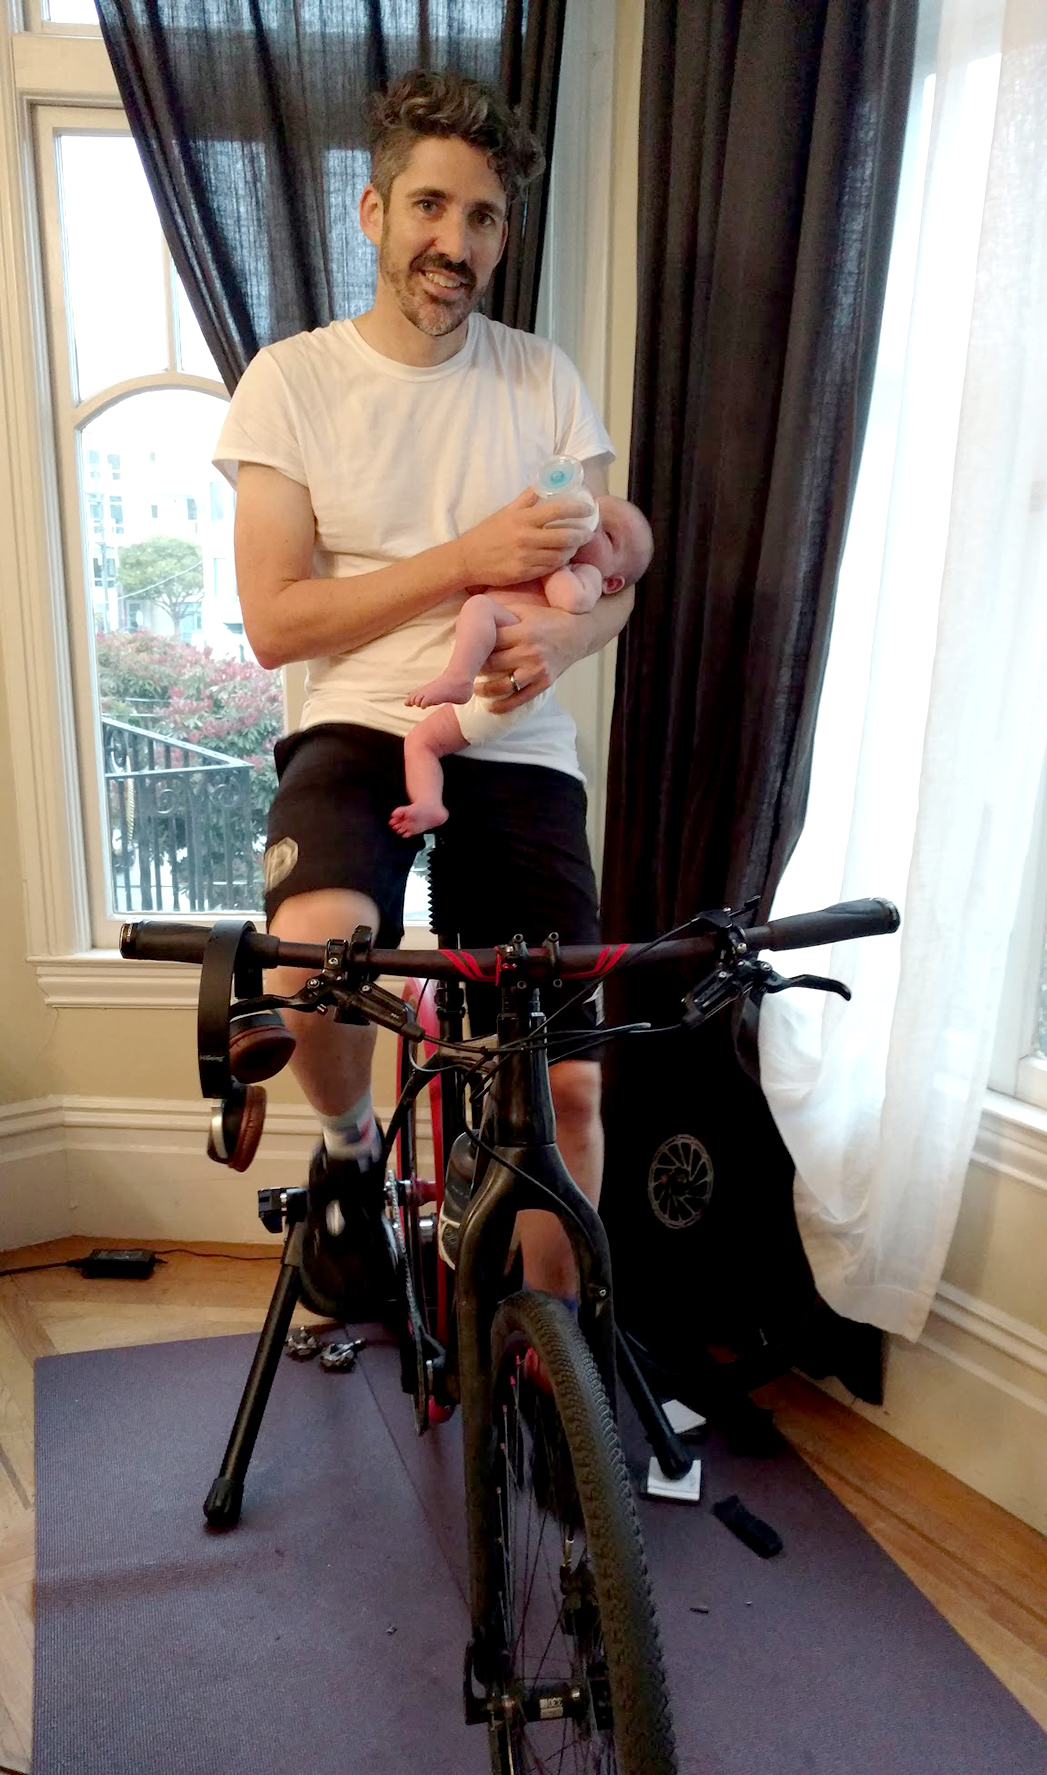 Biking with a newborn